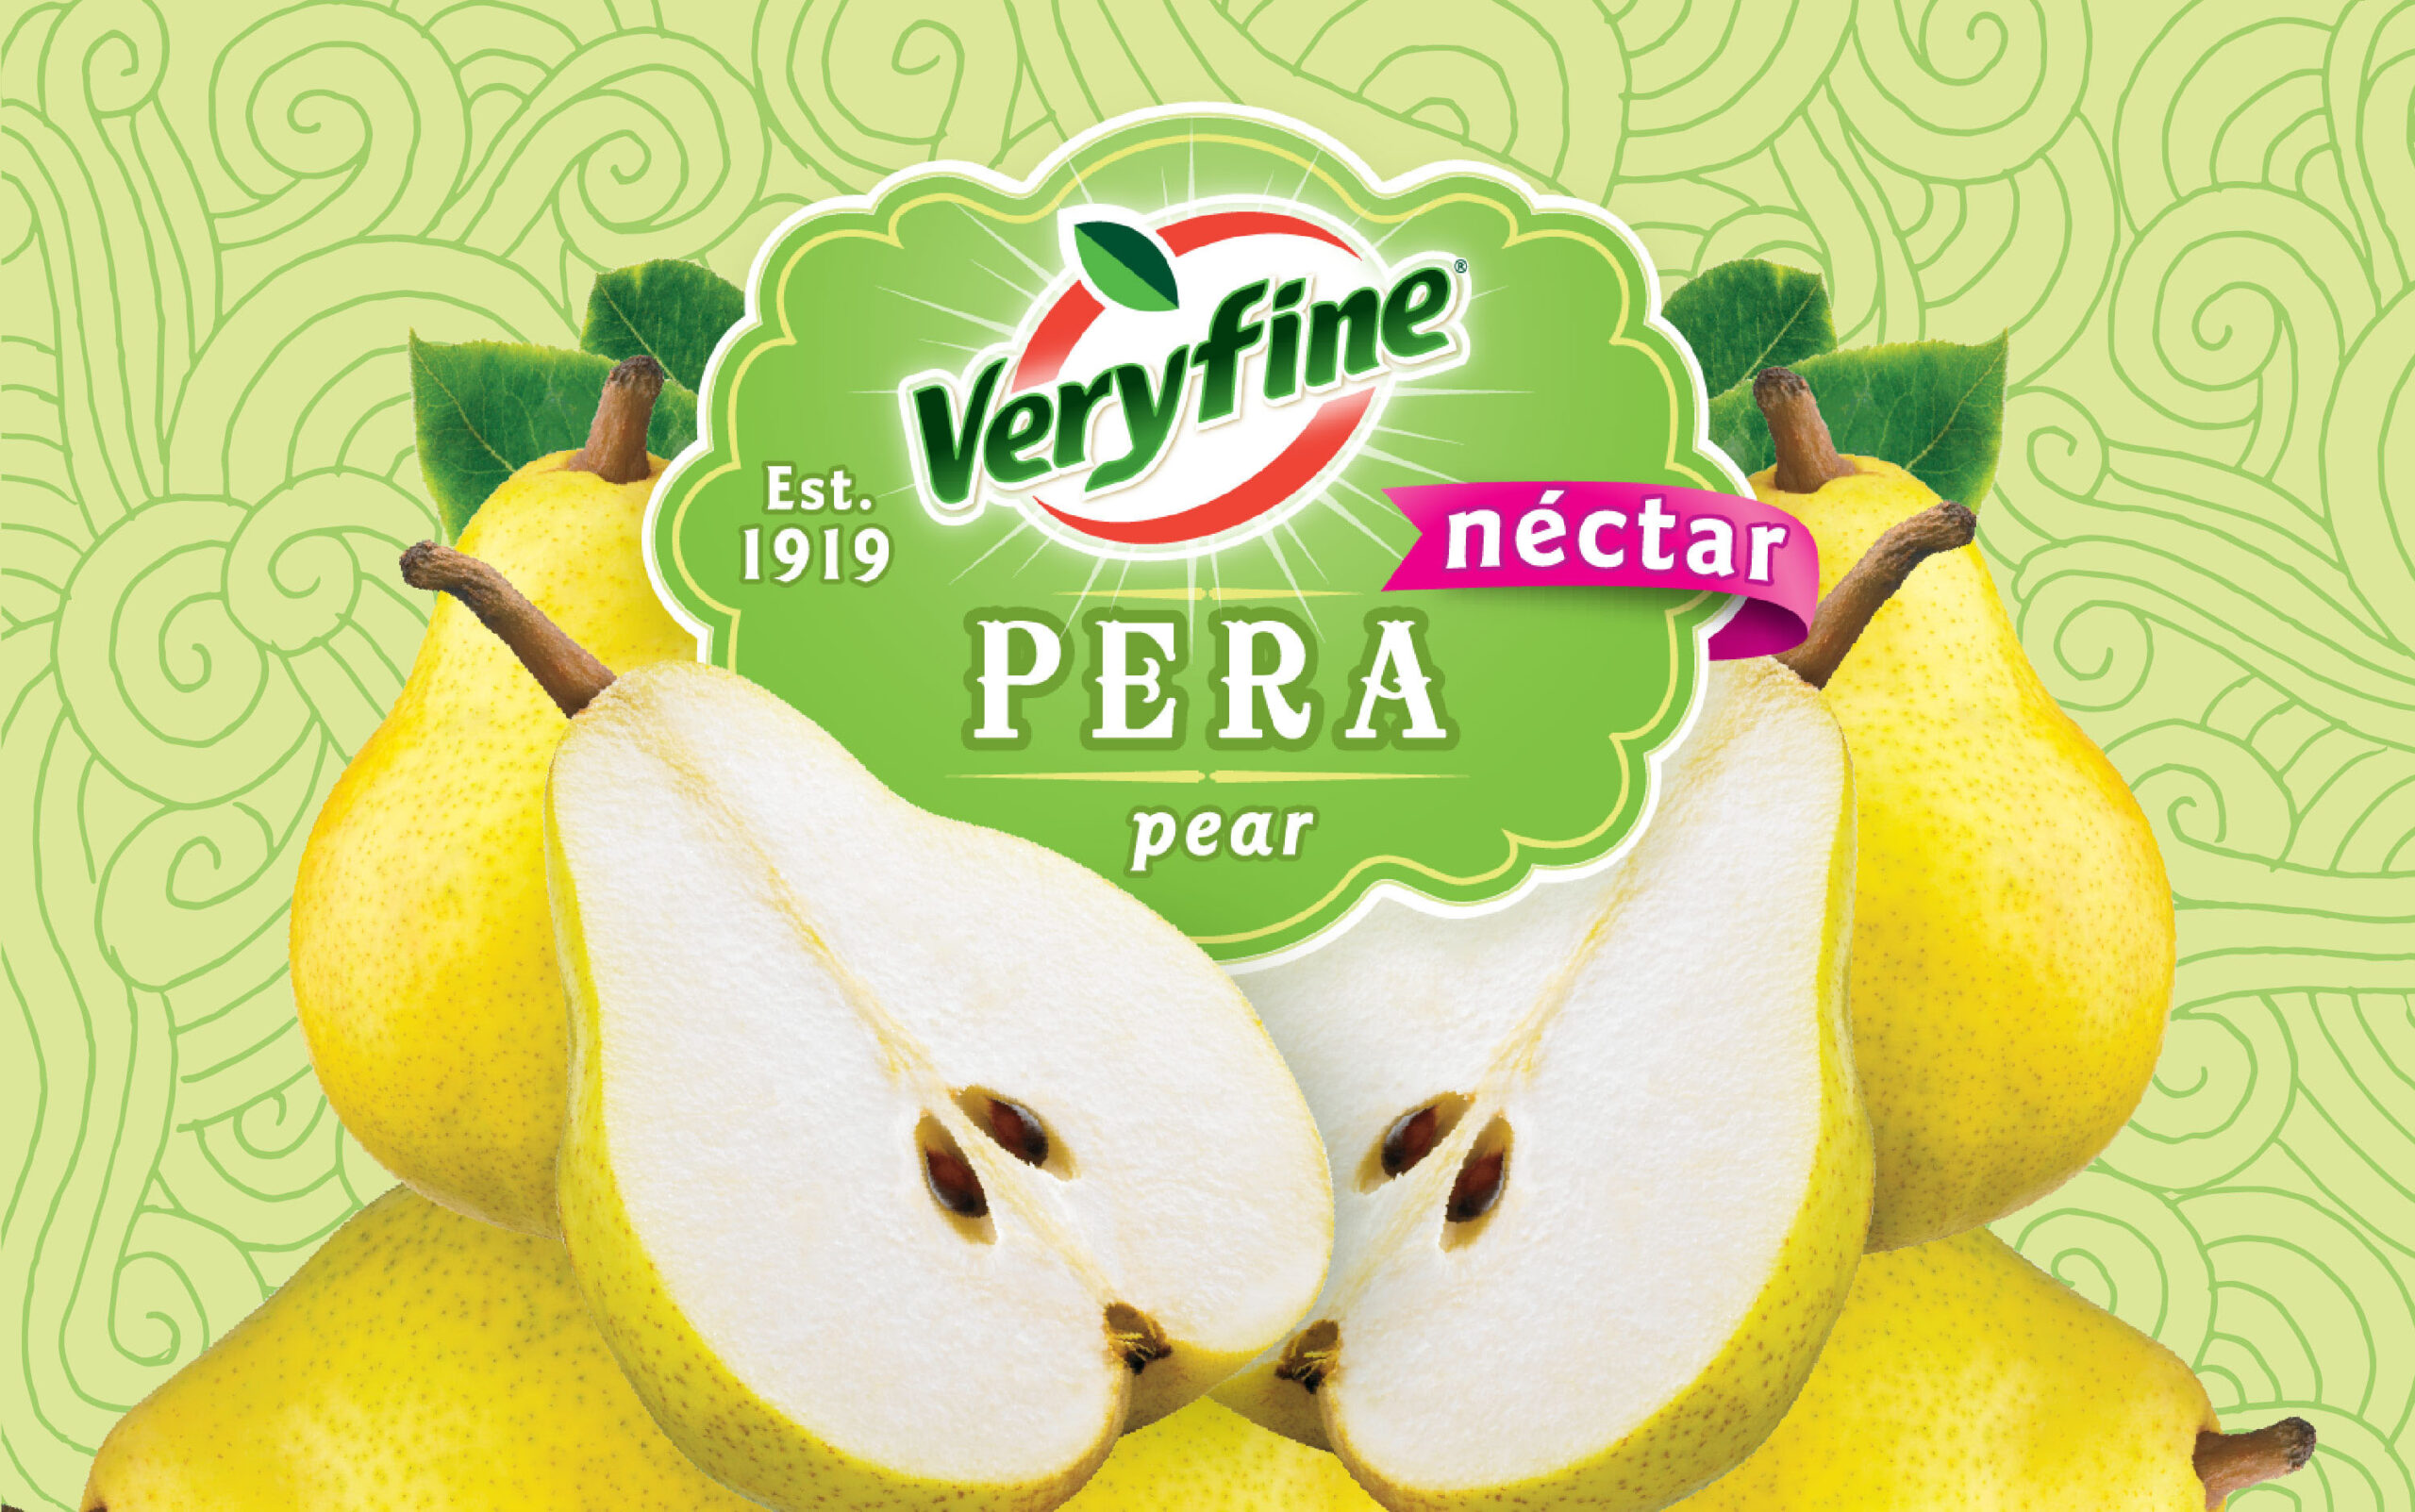 pear flavored juice Label design